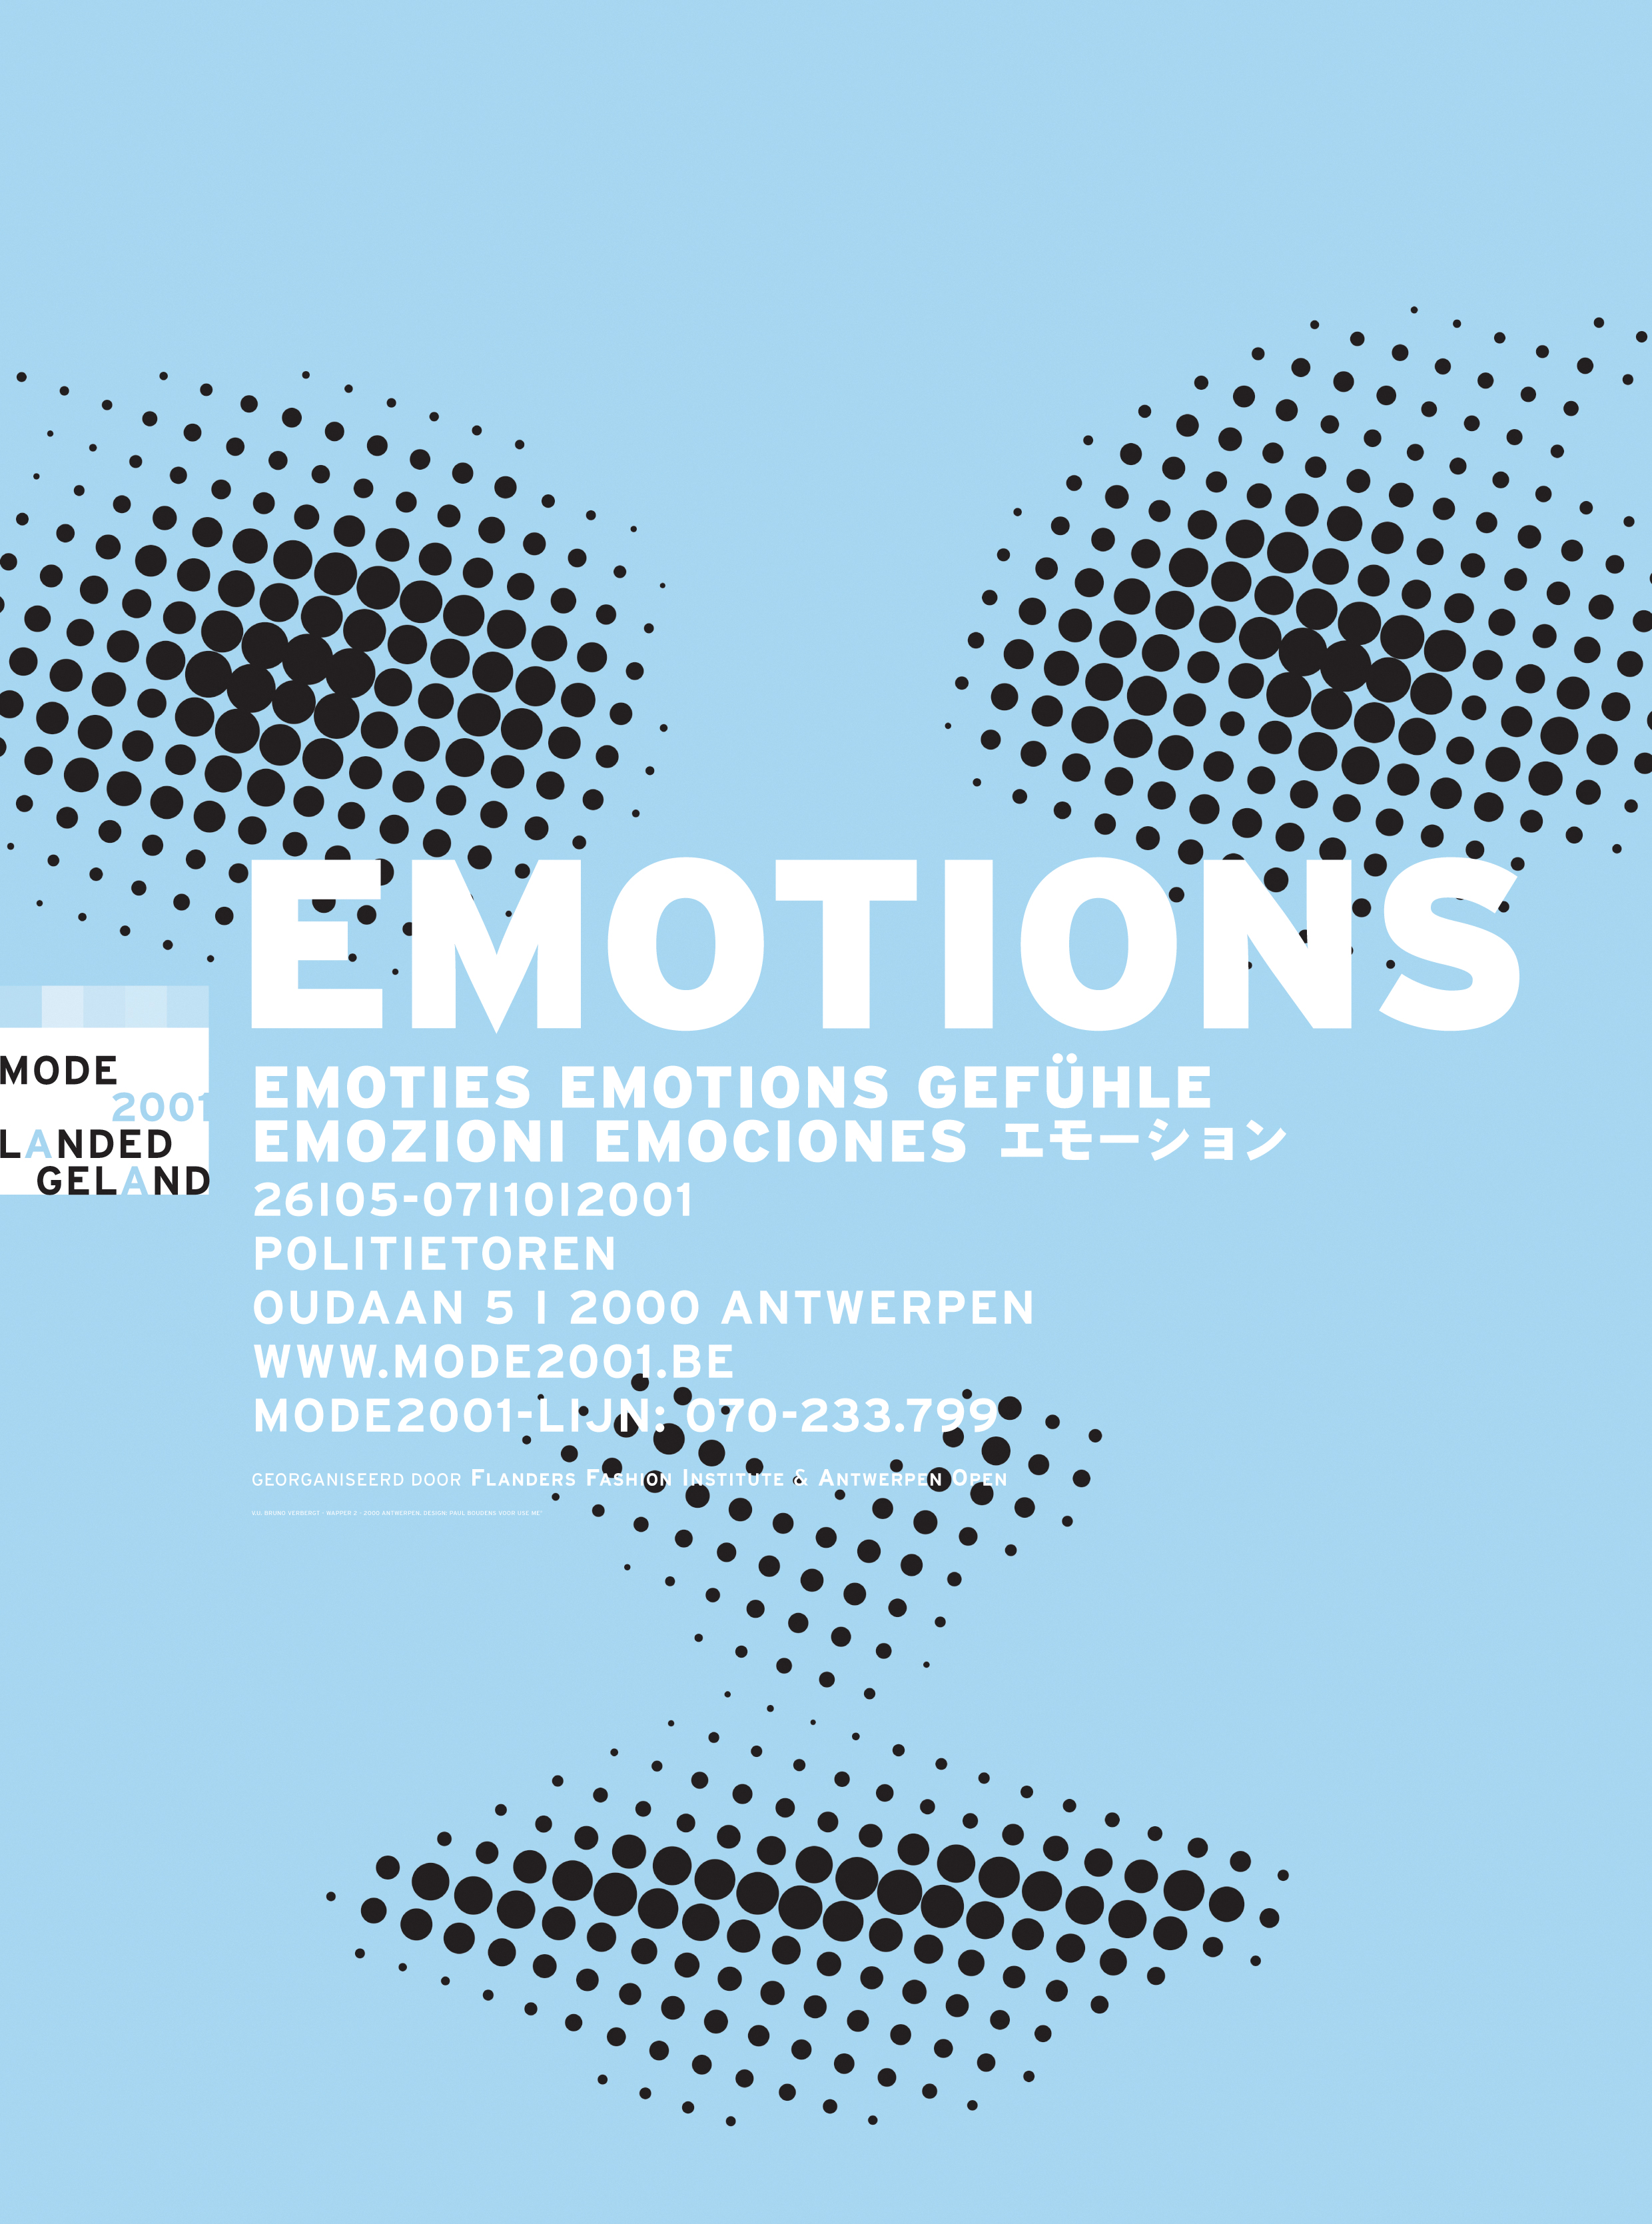 2001 Mode 2001 Emotions Poster.jpg